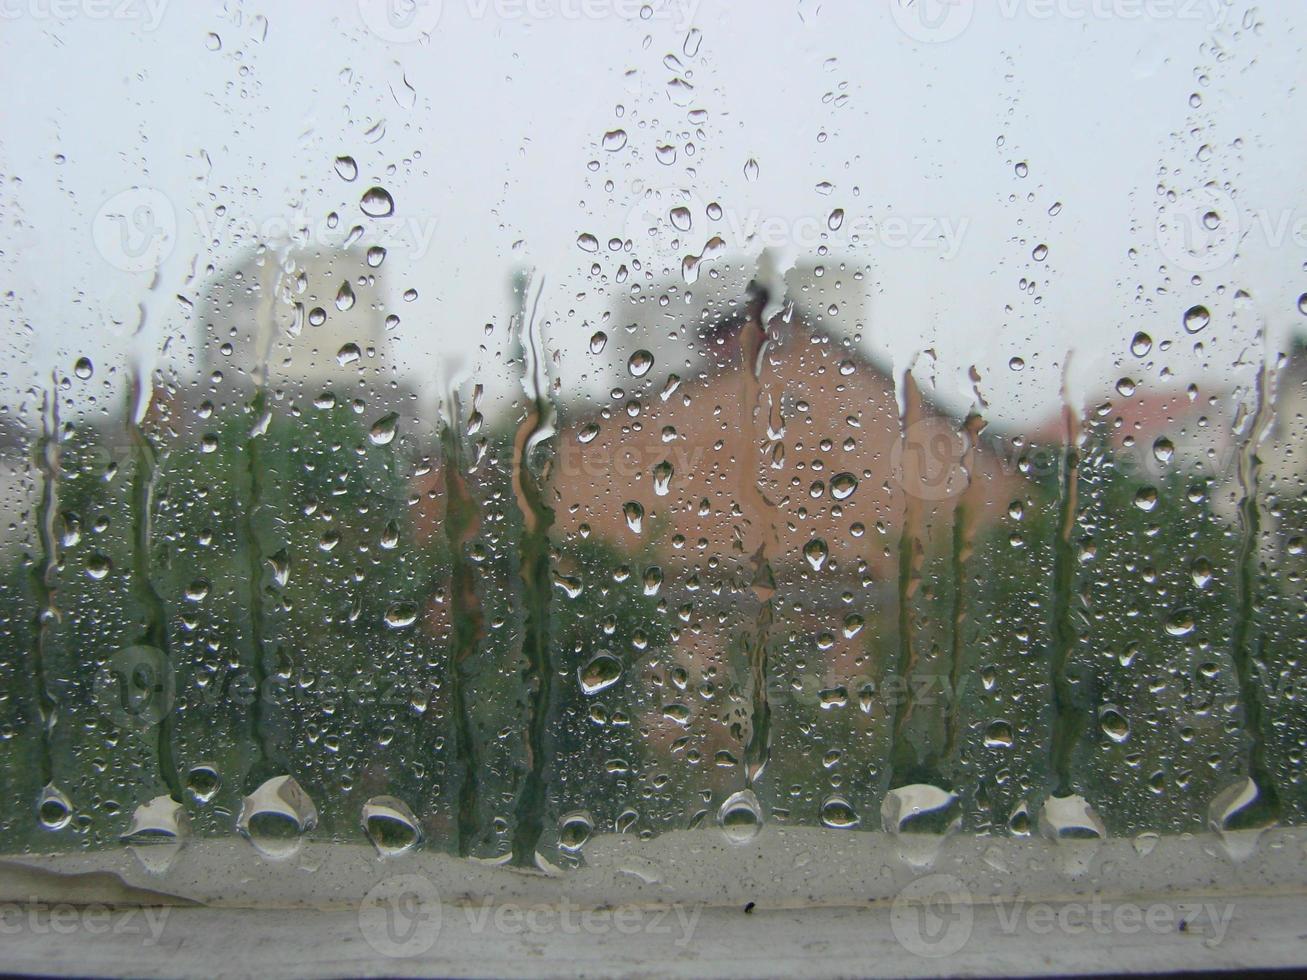 rainy days rain drops on the window surface photo